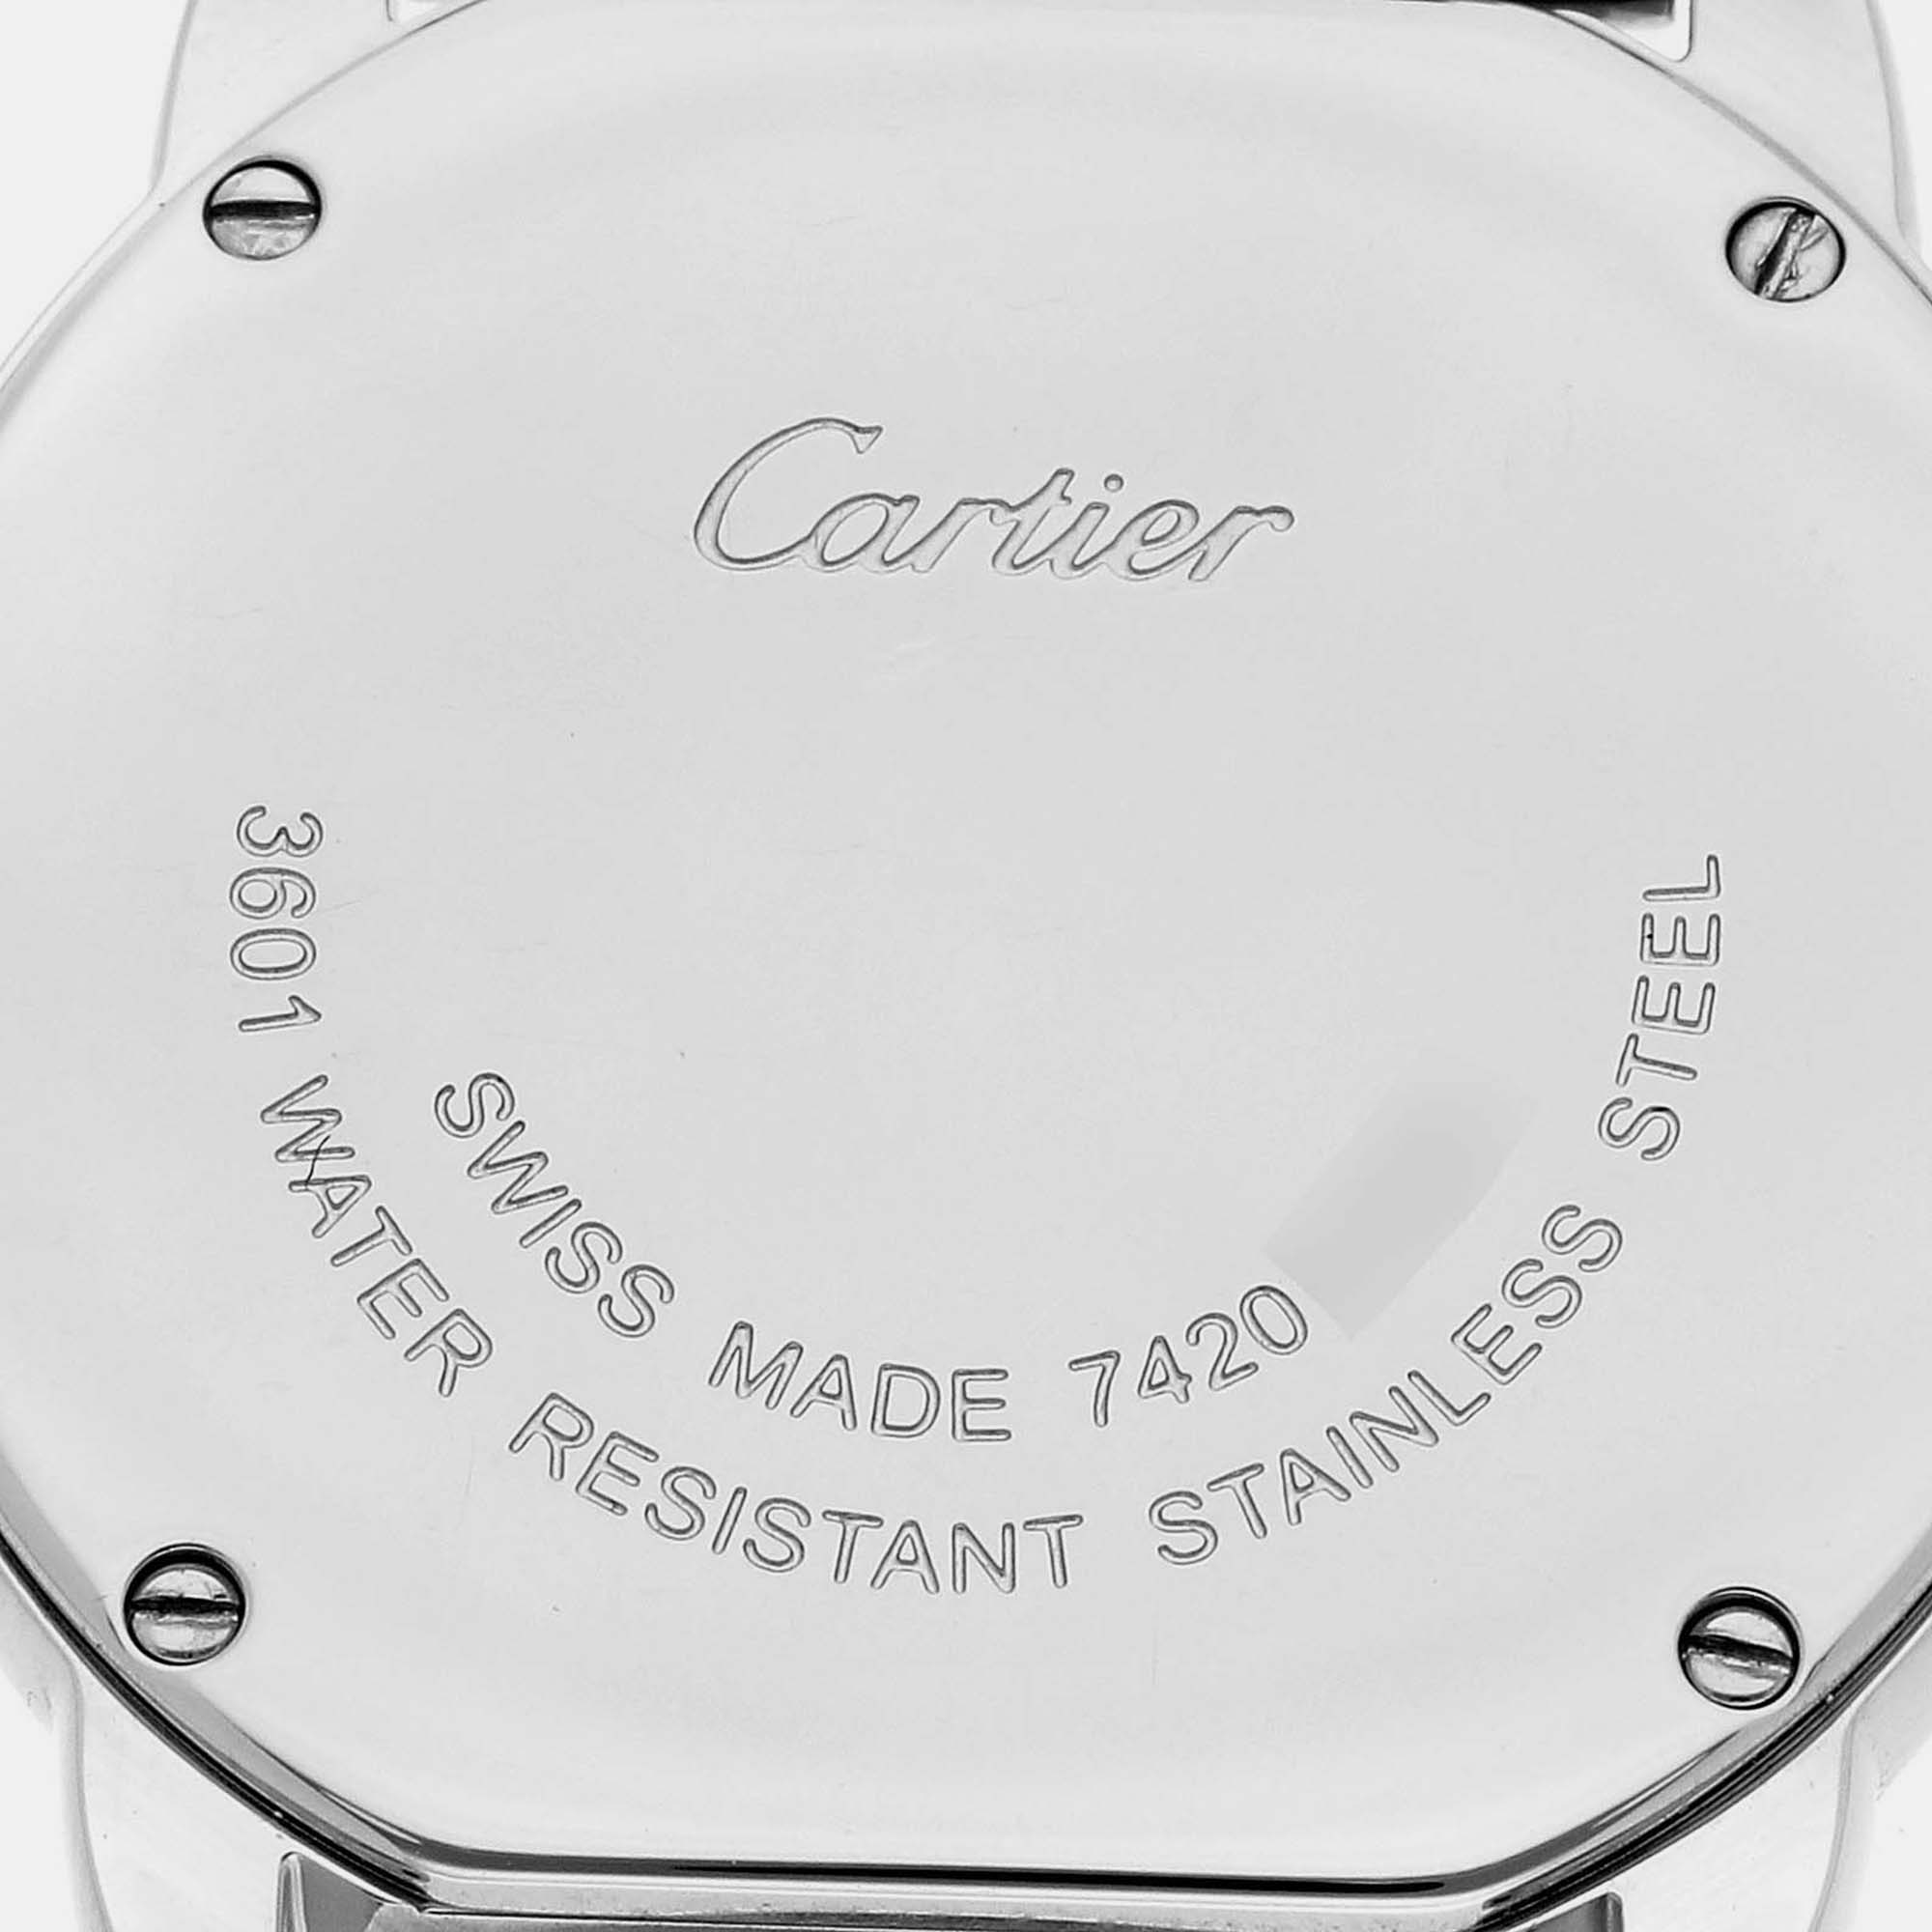 Cartier Ronde Solo Small Steel Quartz Ladies Watch W6701004